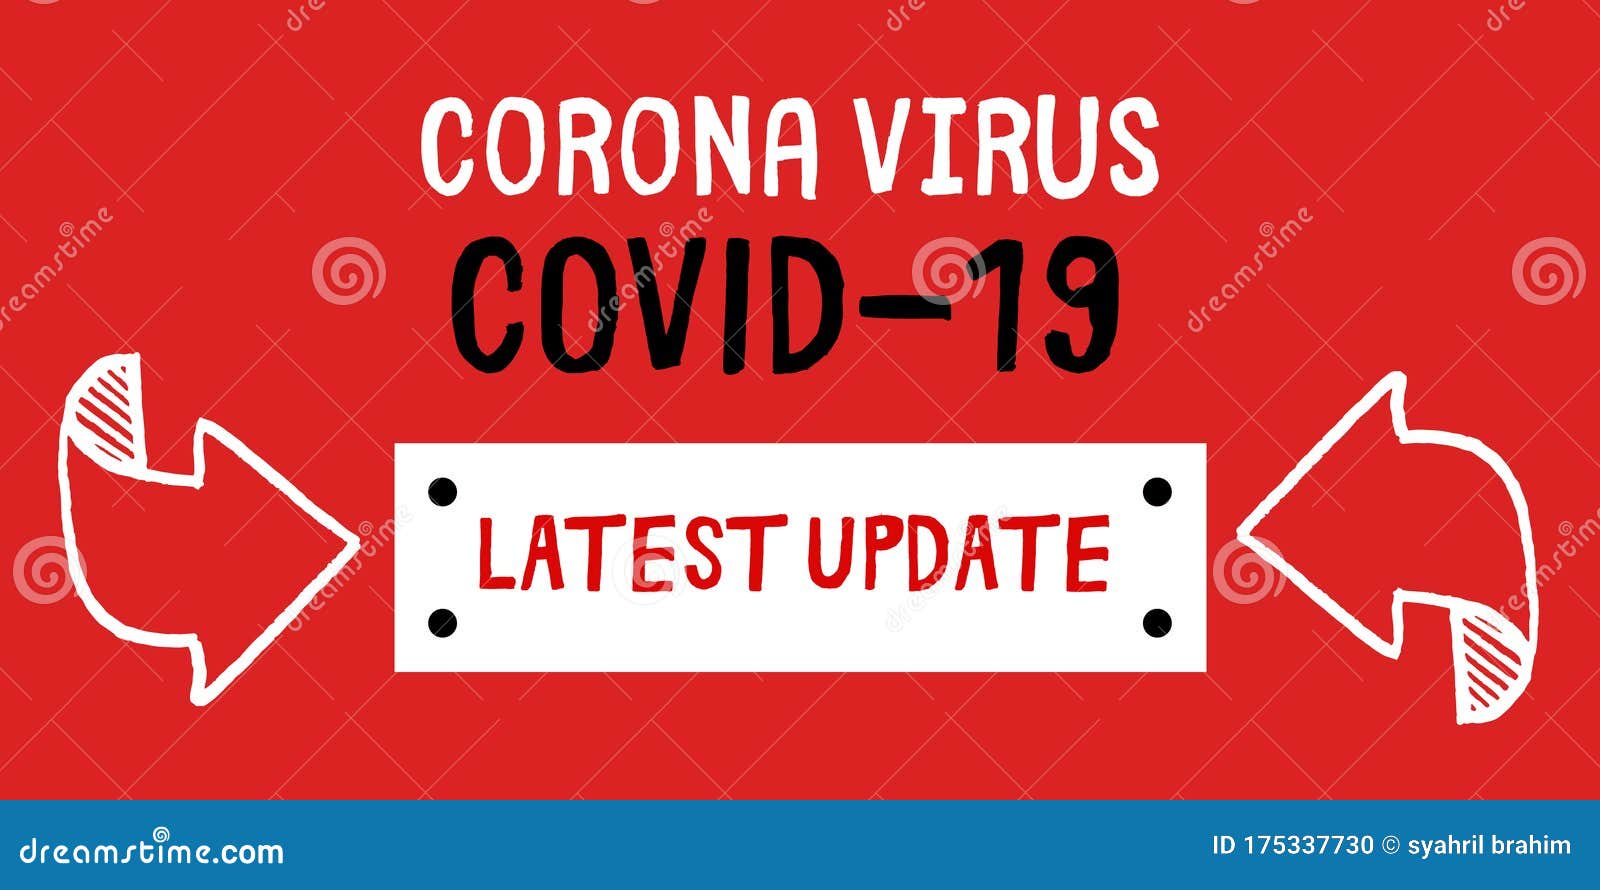 corona virus covid-19 latest update on red background.